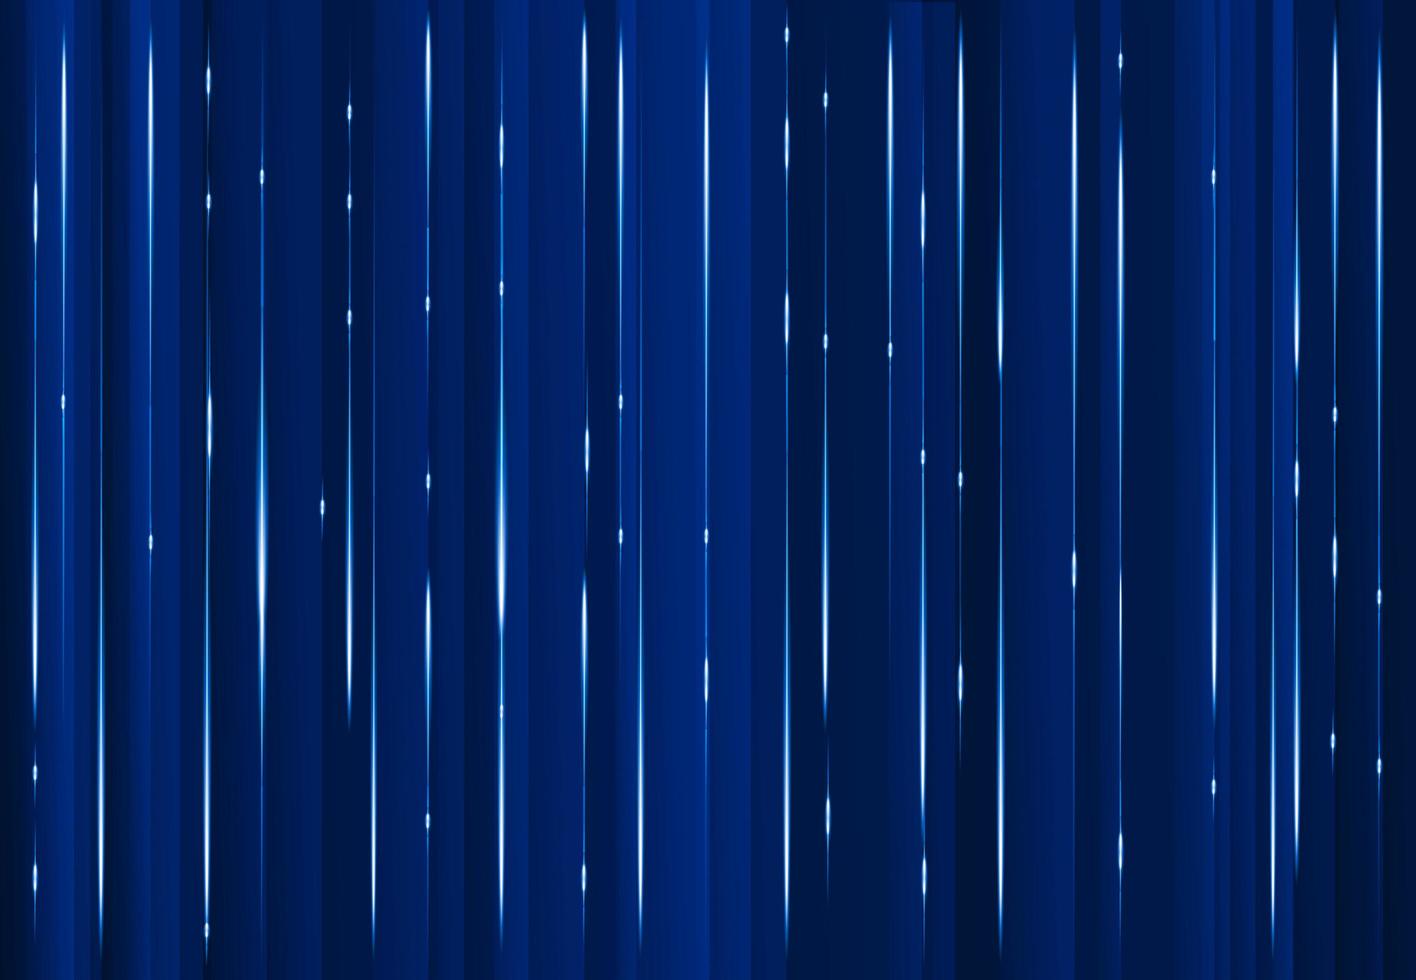 abstrac digitale lazer lijn science fiction matrix donkerblauwe achtergrond vector